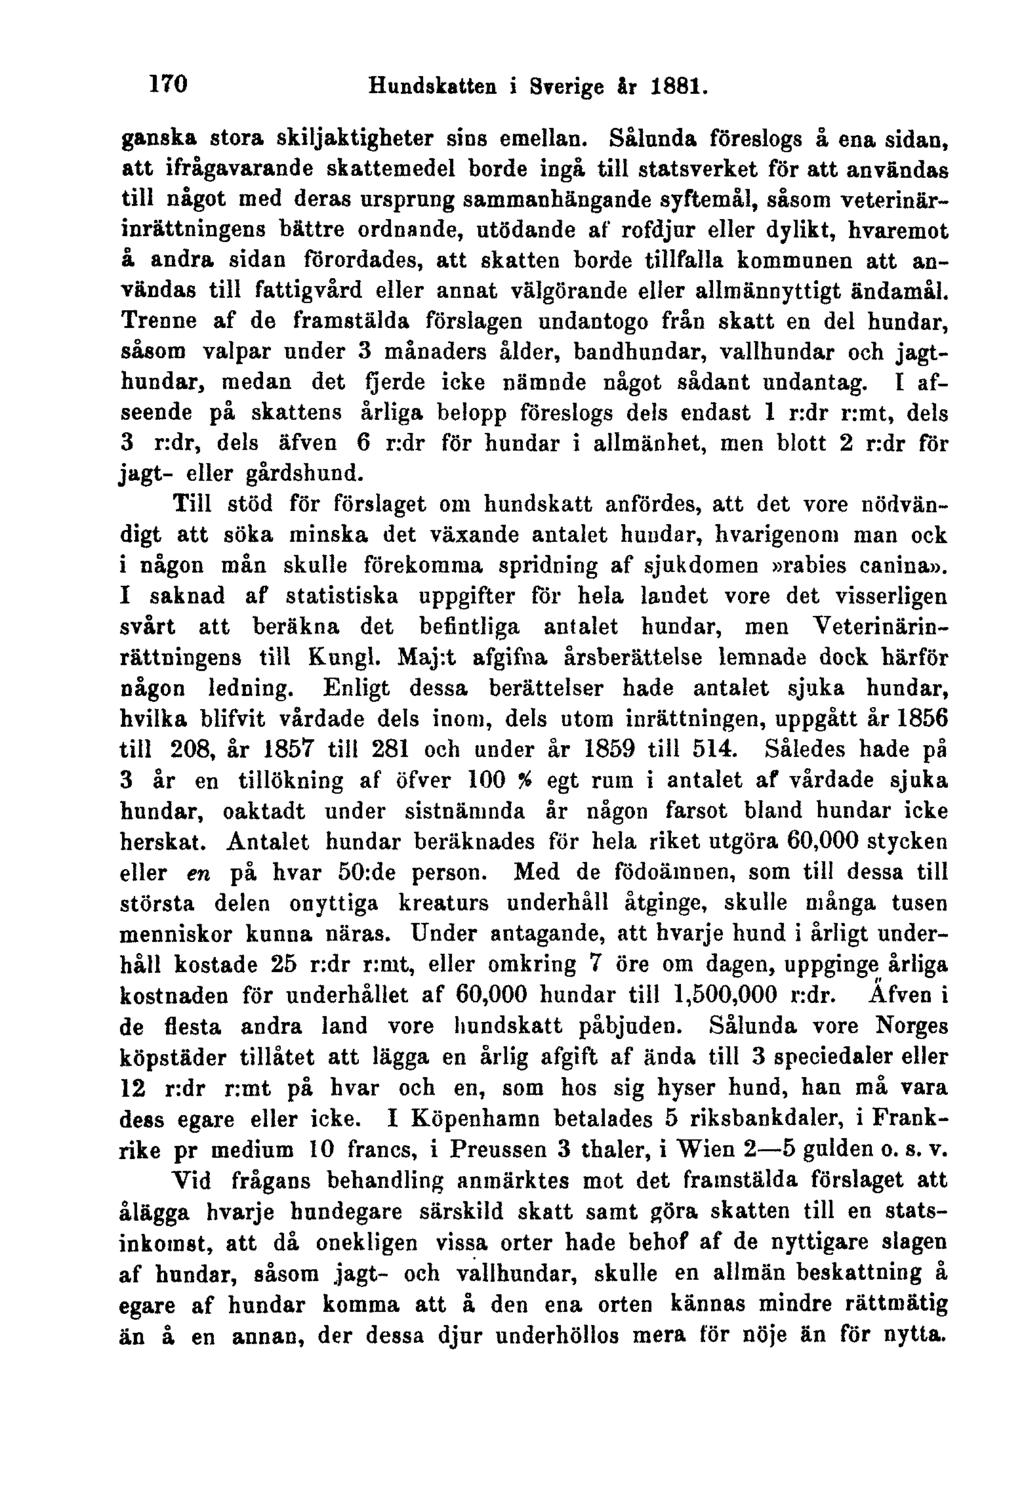 170 Hundskatten i Sverige år 1881. ganska stora skiljaktigheter sins emellan.